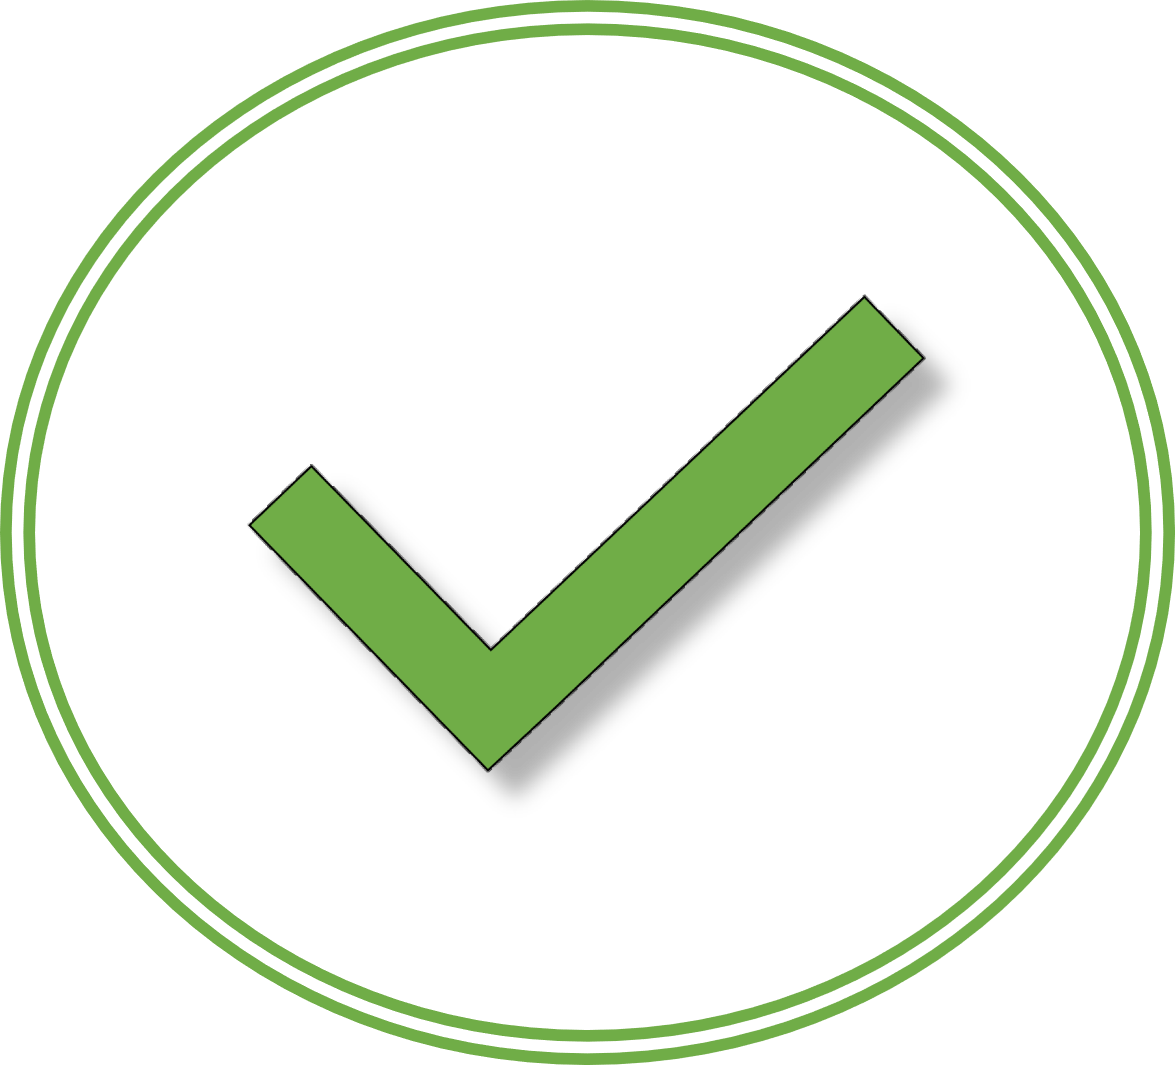 a green check mark in a circle